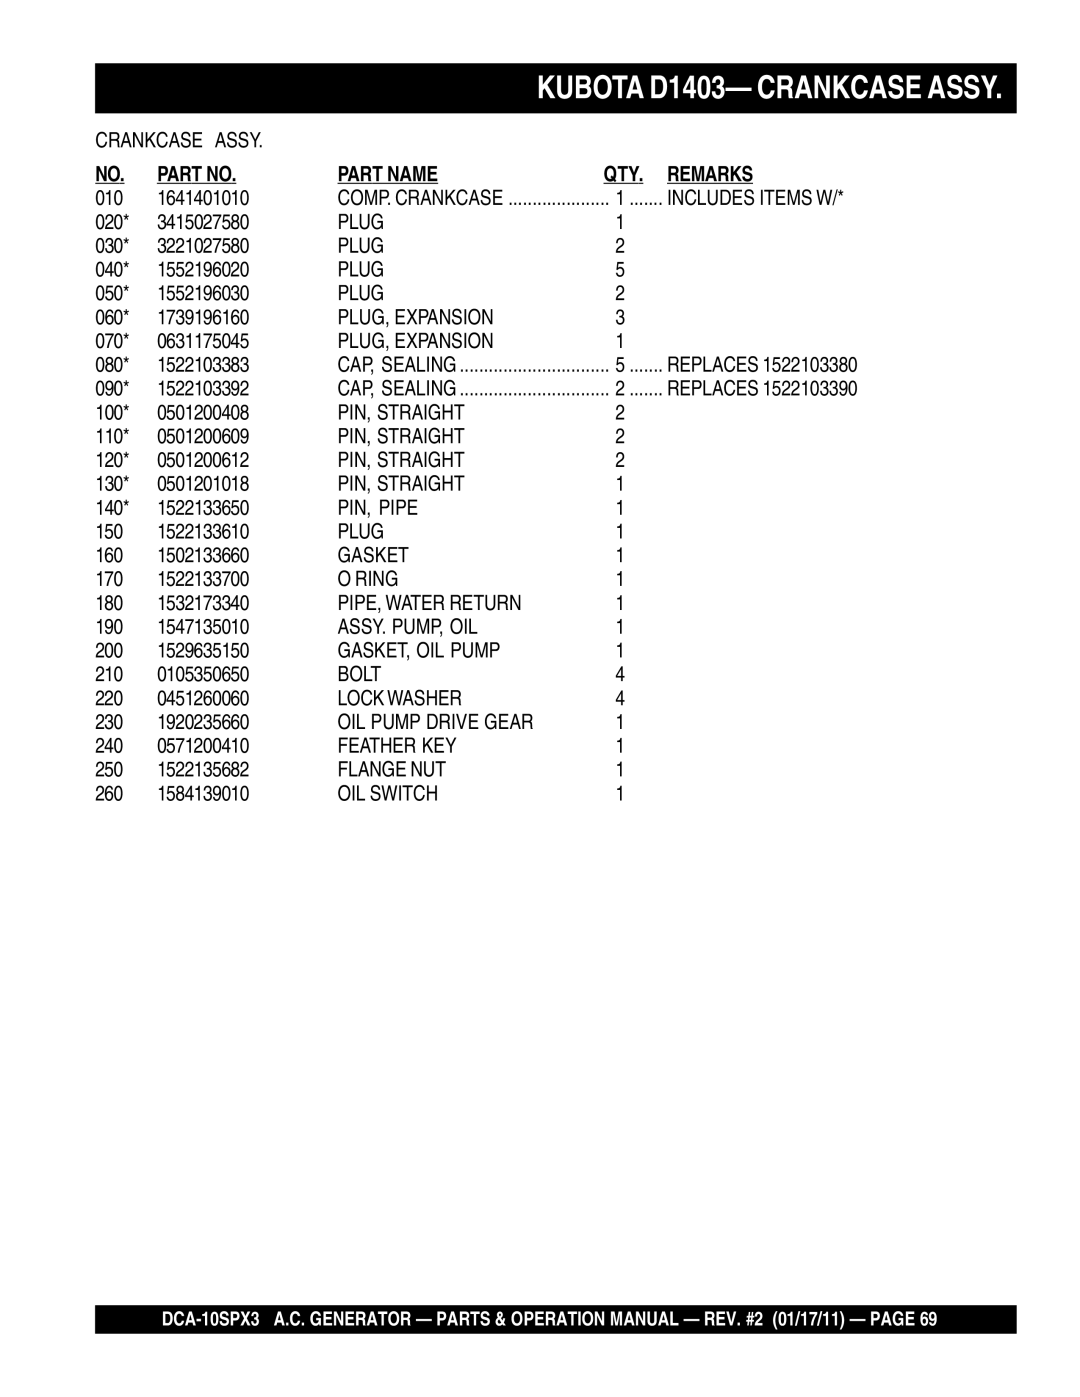 Multiquip DCA10SPX3 manual KUBOTA D1403- CRANKCASE ASSY, Includes Items W 